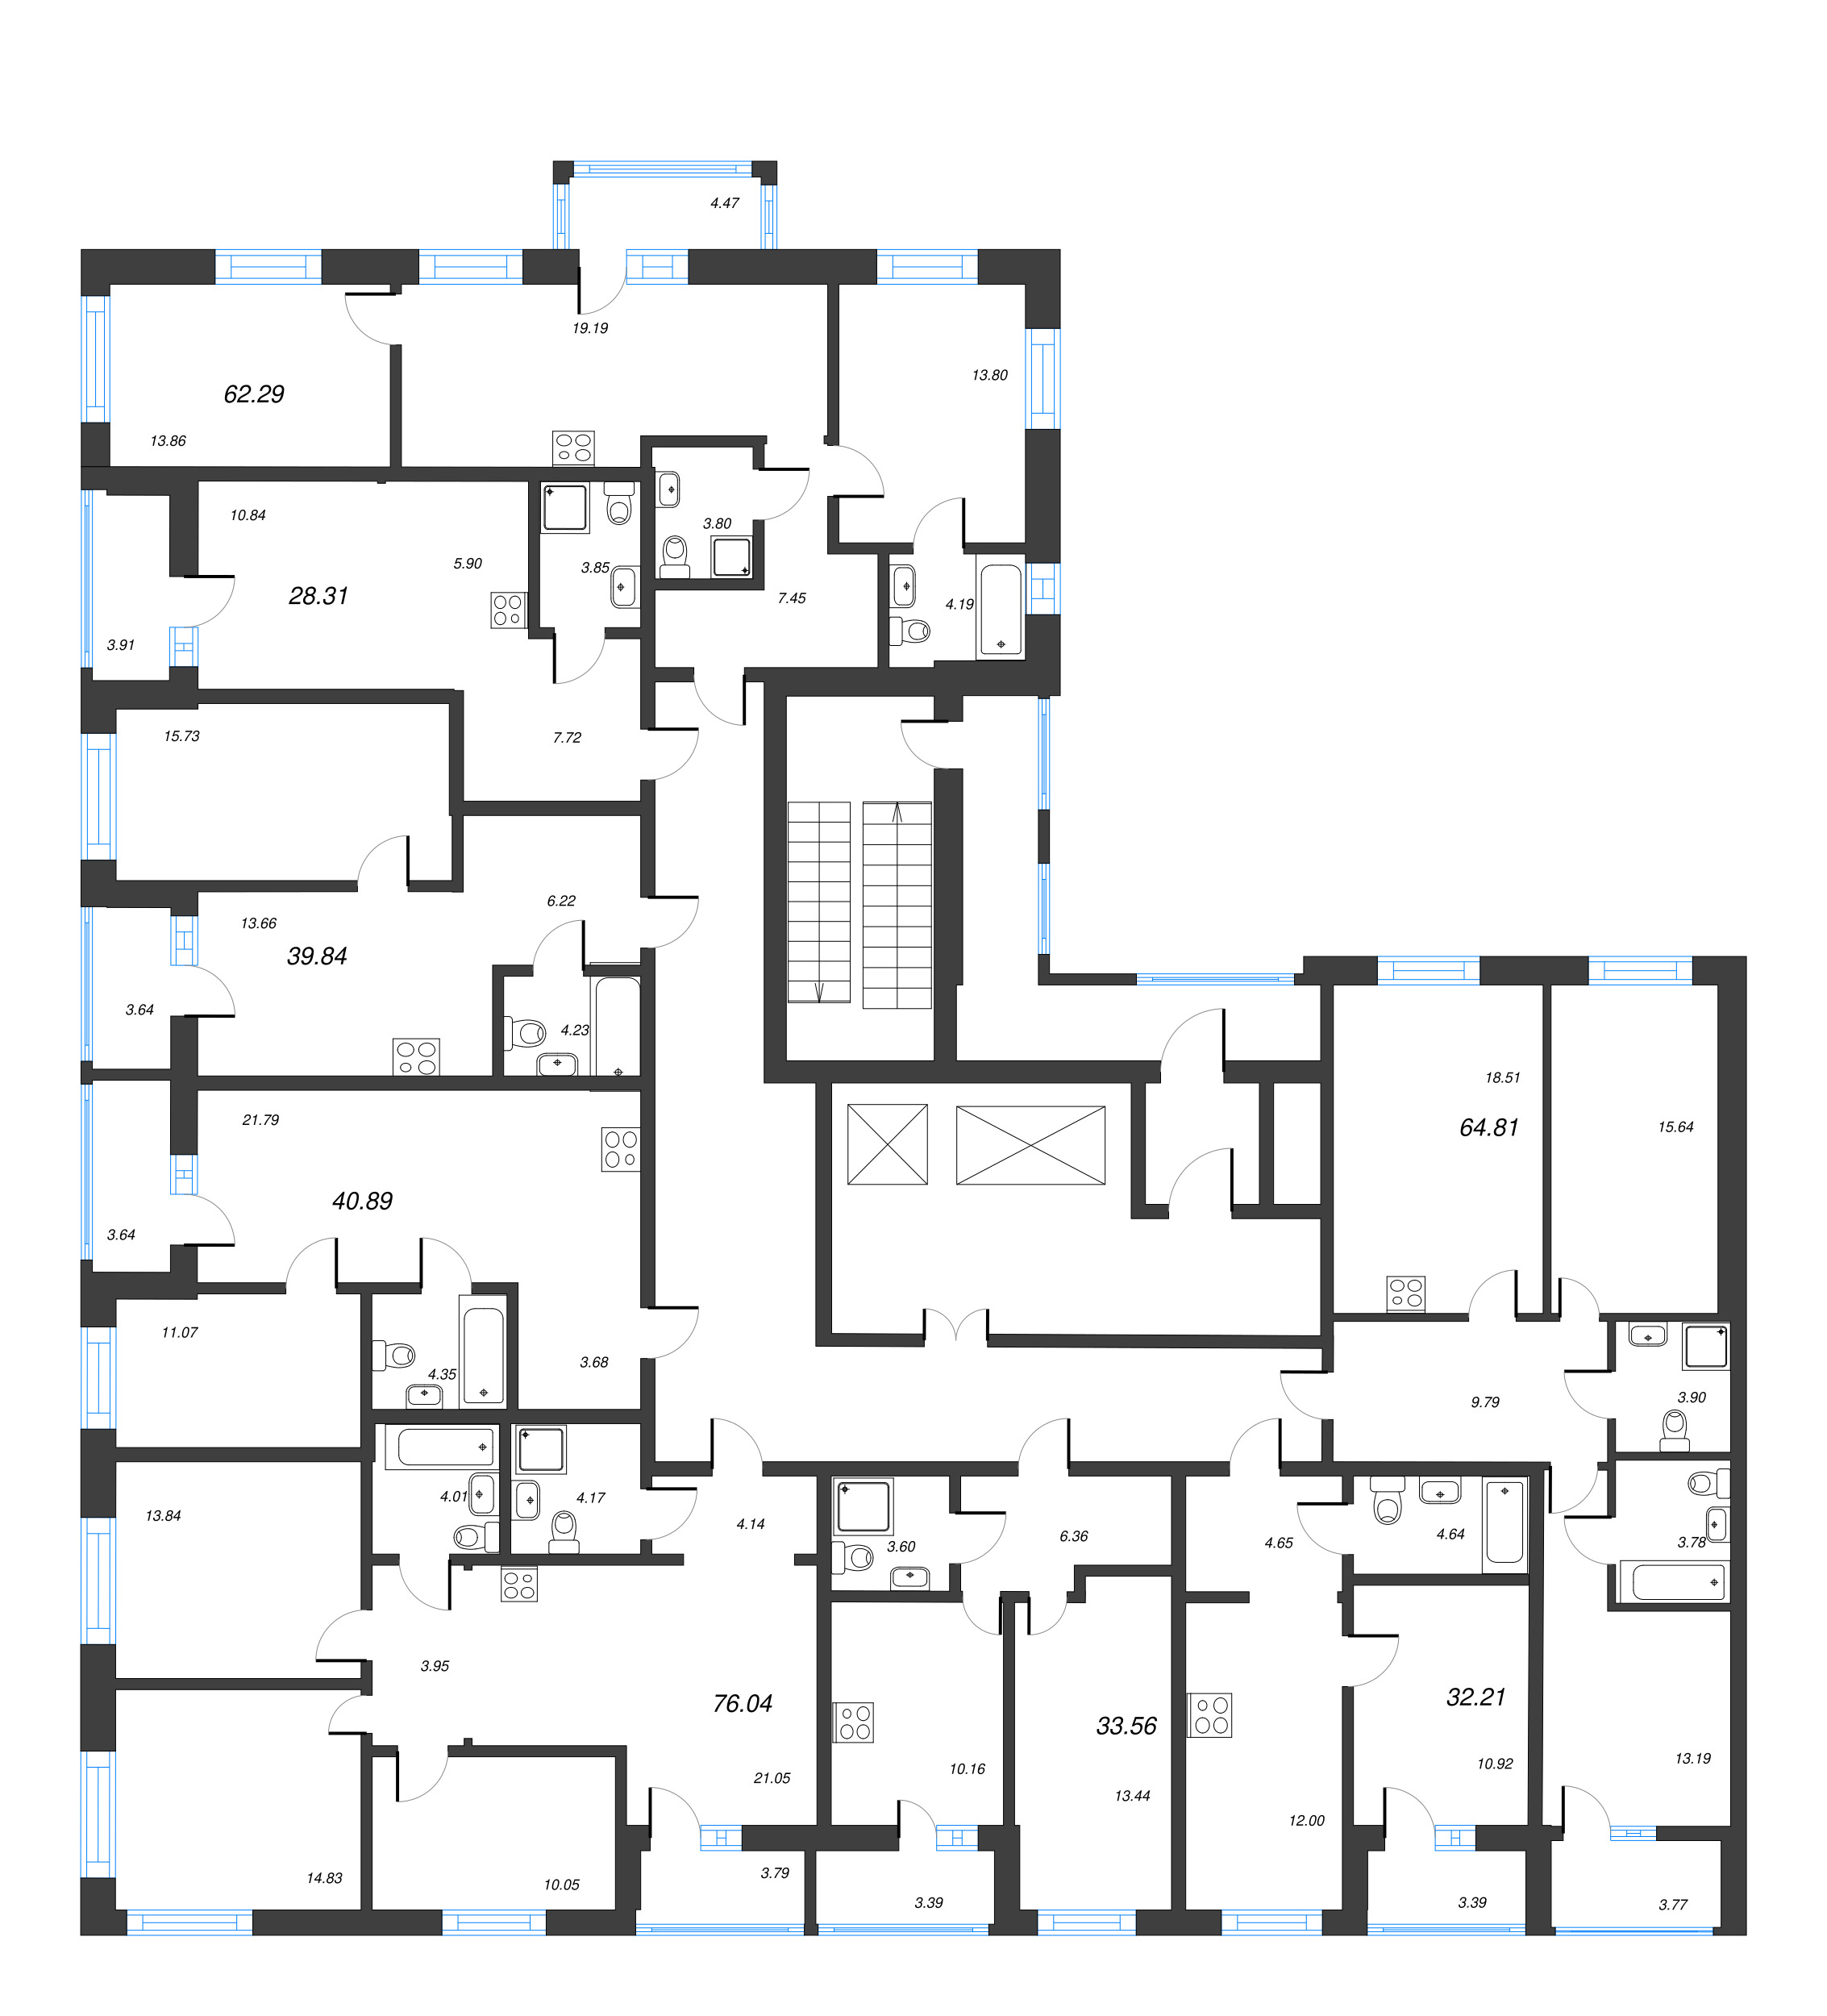 3-комнатная квартира, 76.04 м² в ЖК "Чёрная речка от Ильича" - планировка этажа